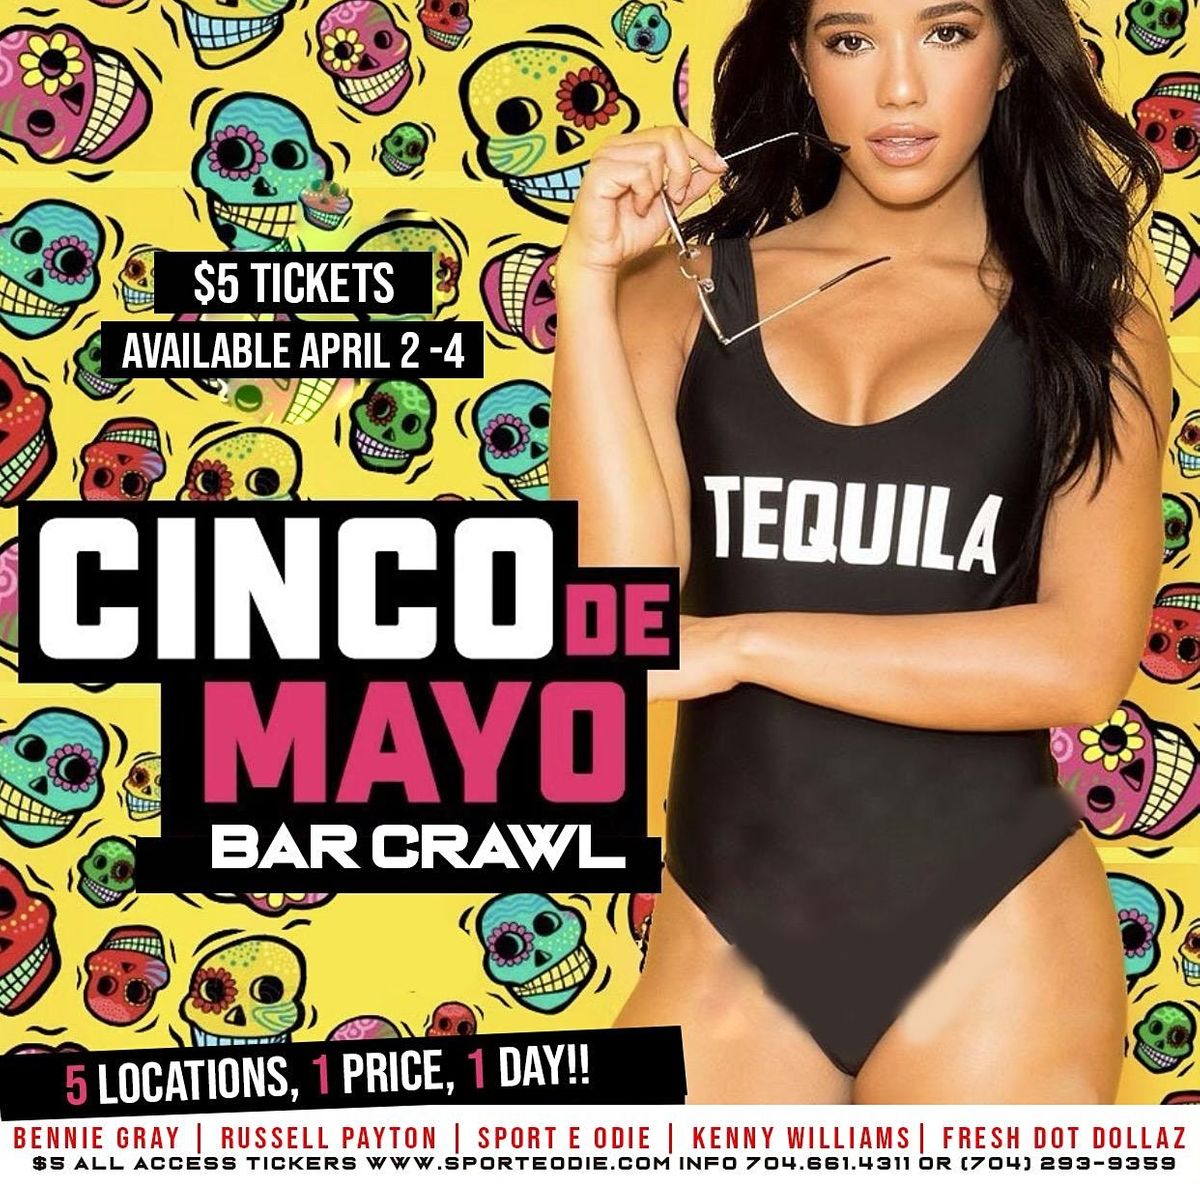 3rd Annual Cinco De Mayo Bar Crawl Tattooz & Booz, Charlotte, NC